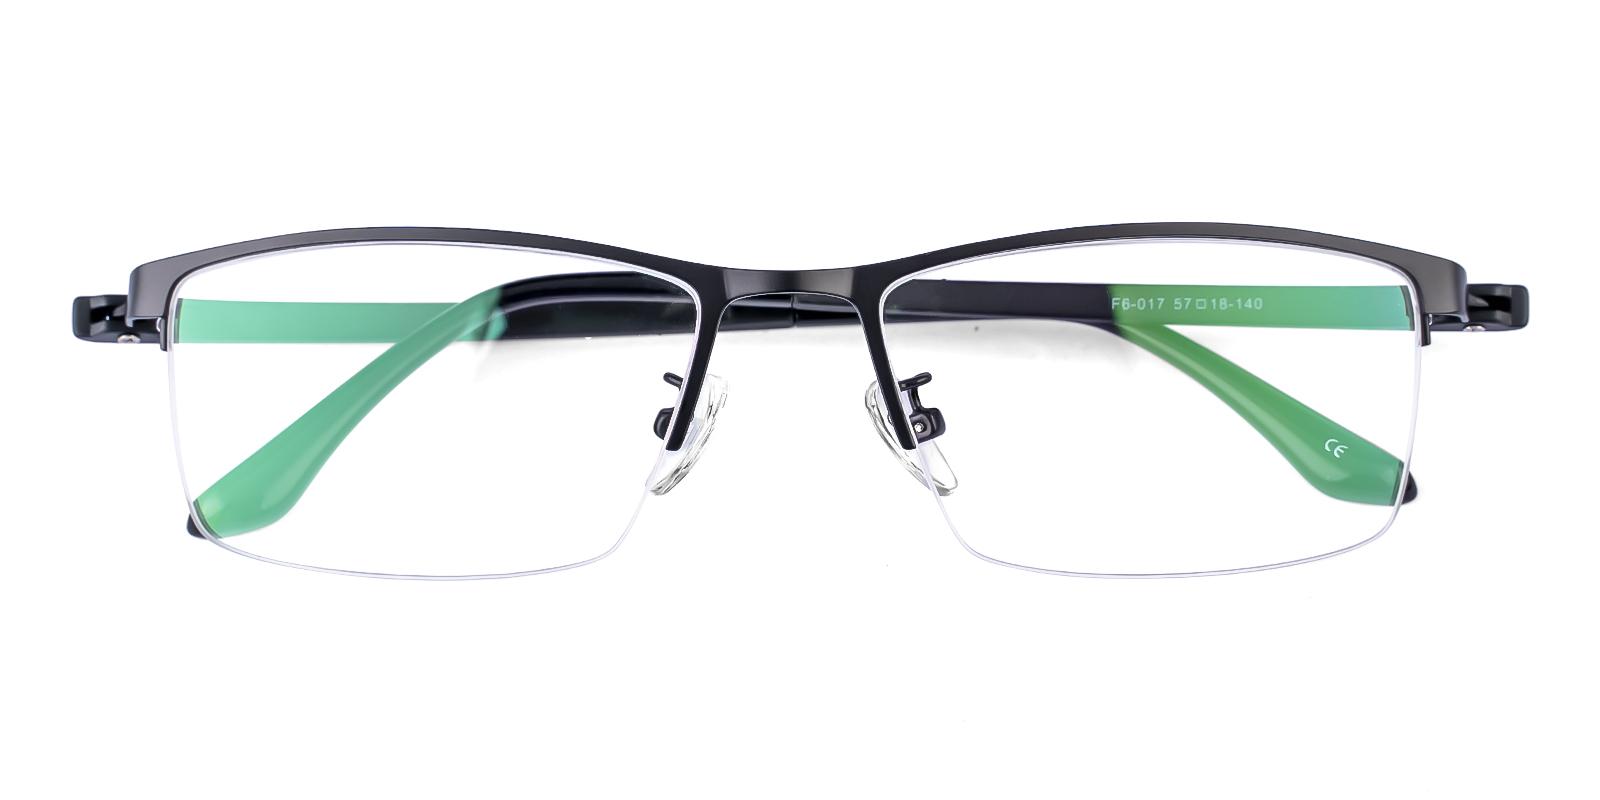 Kepan Black Metal , TR Eyeglasses , NosePads Frames from ABBE Glasses